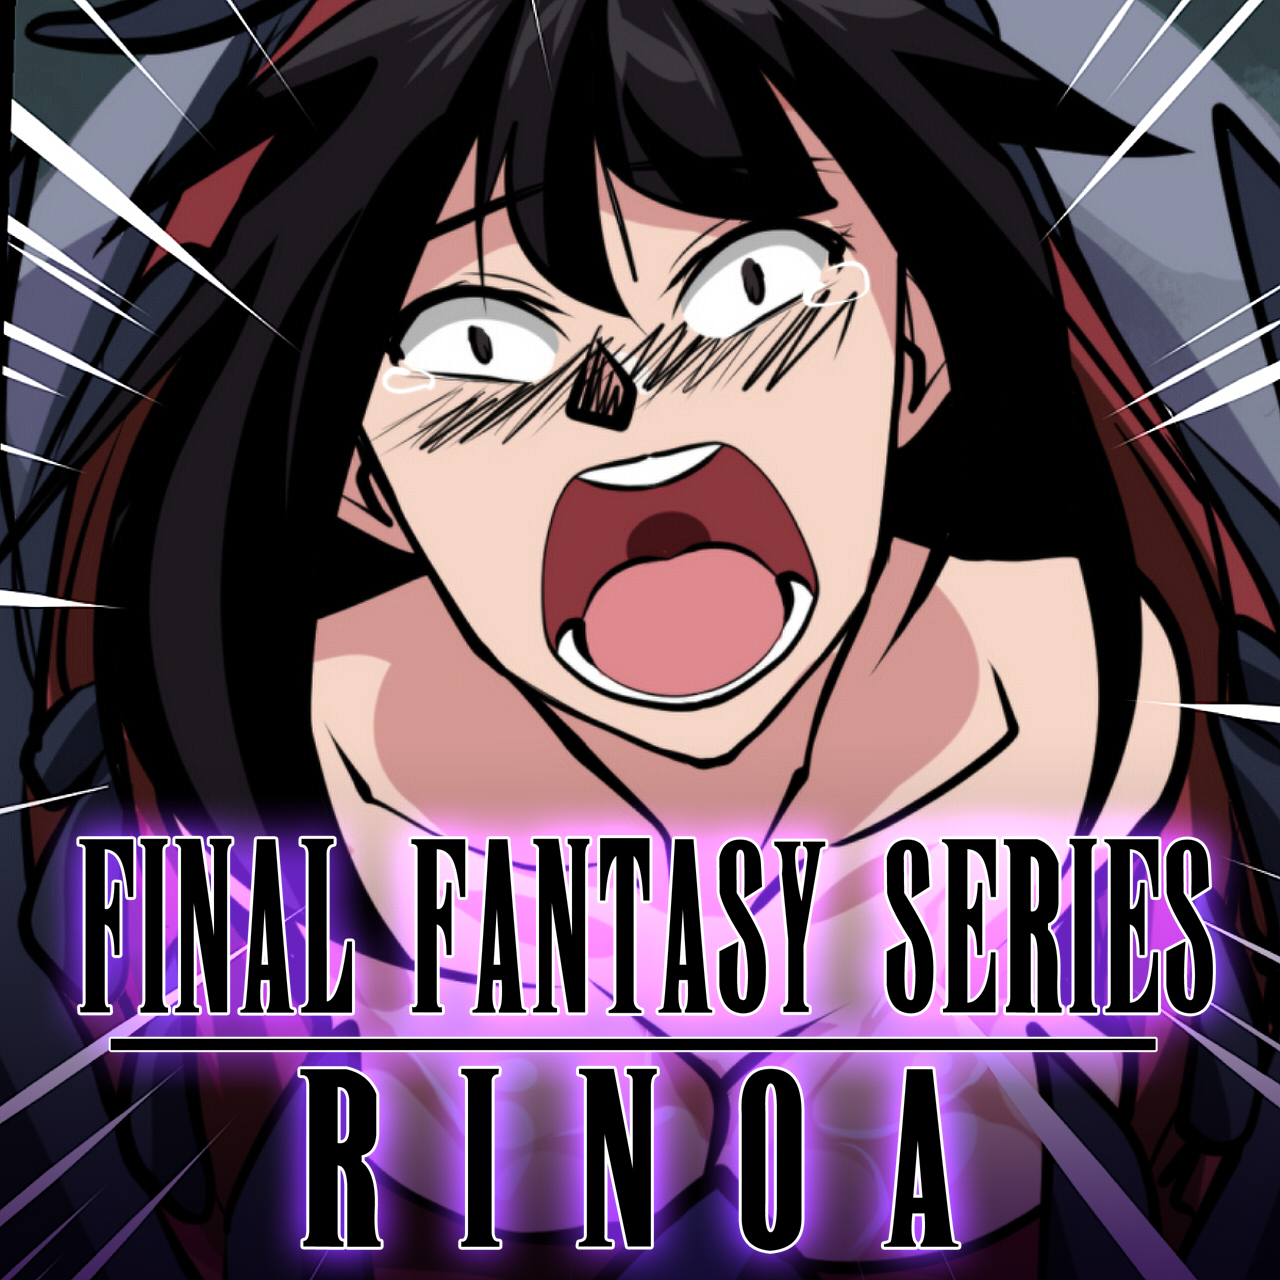 Final Fantasy Series: Rinoa